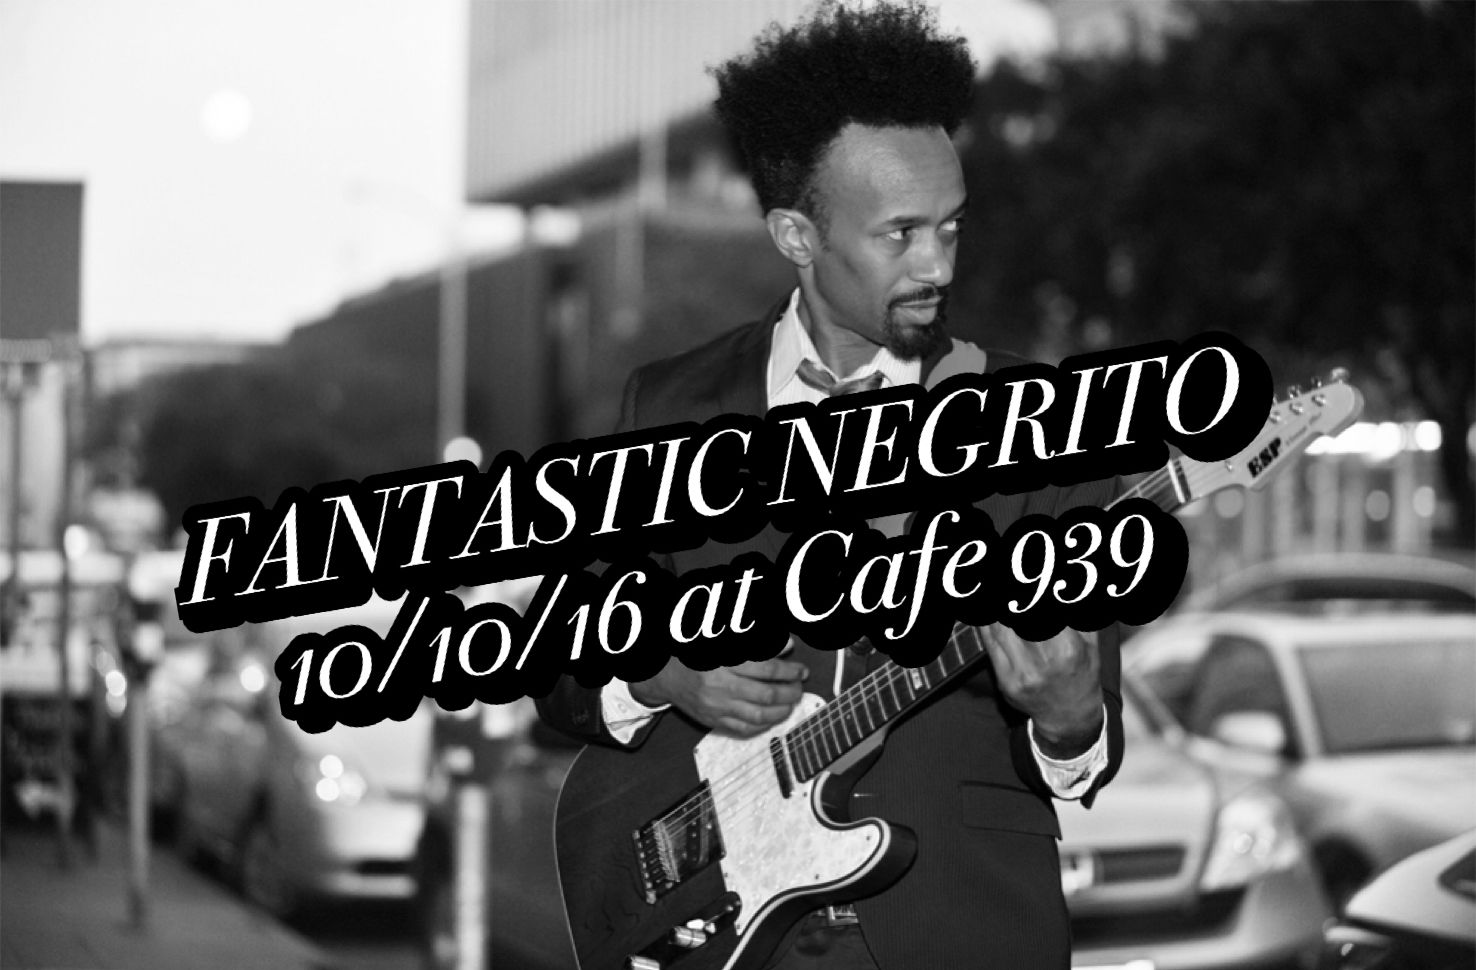 Fantastic Negrito @ Café 939